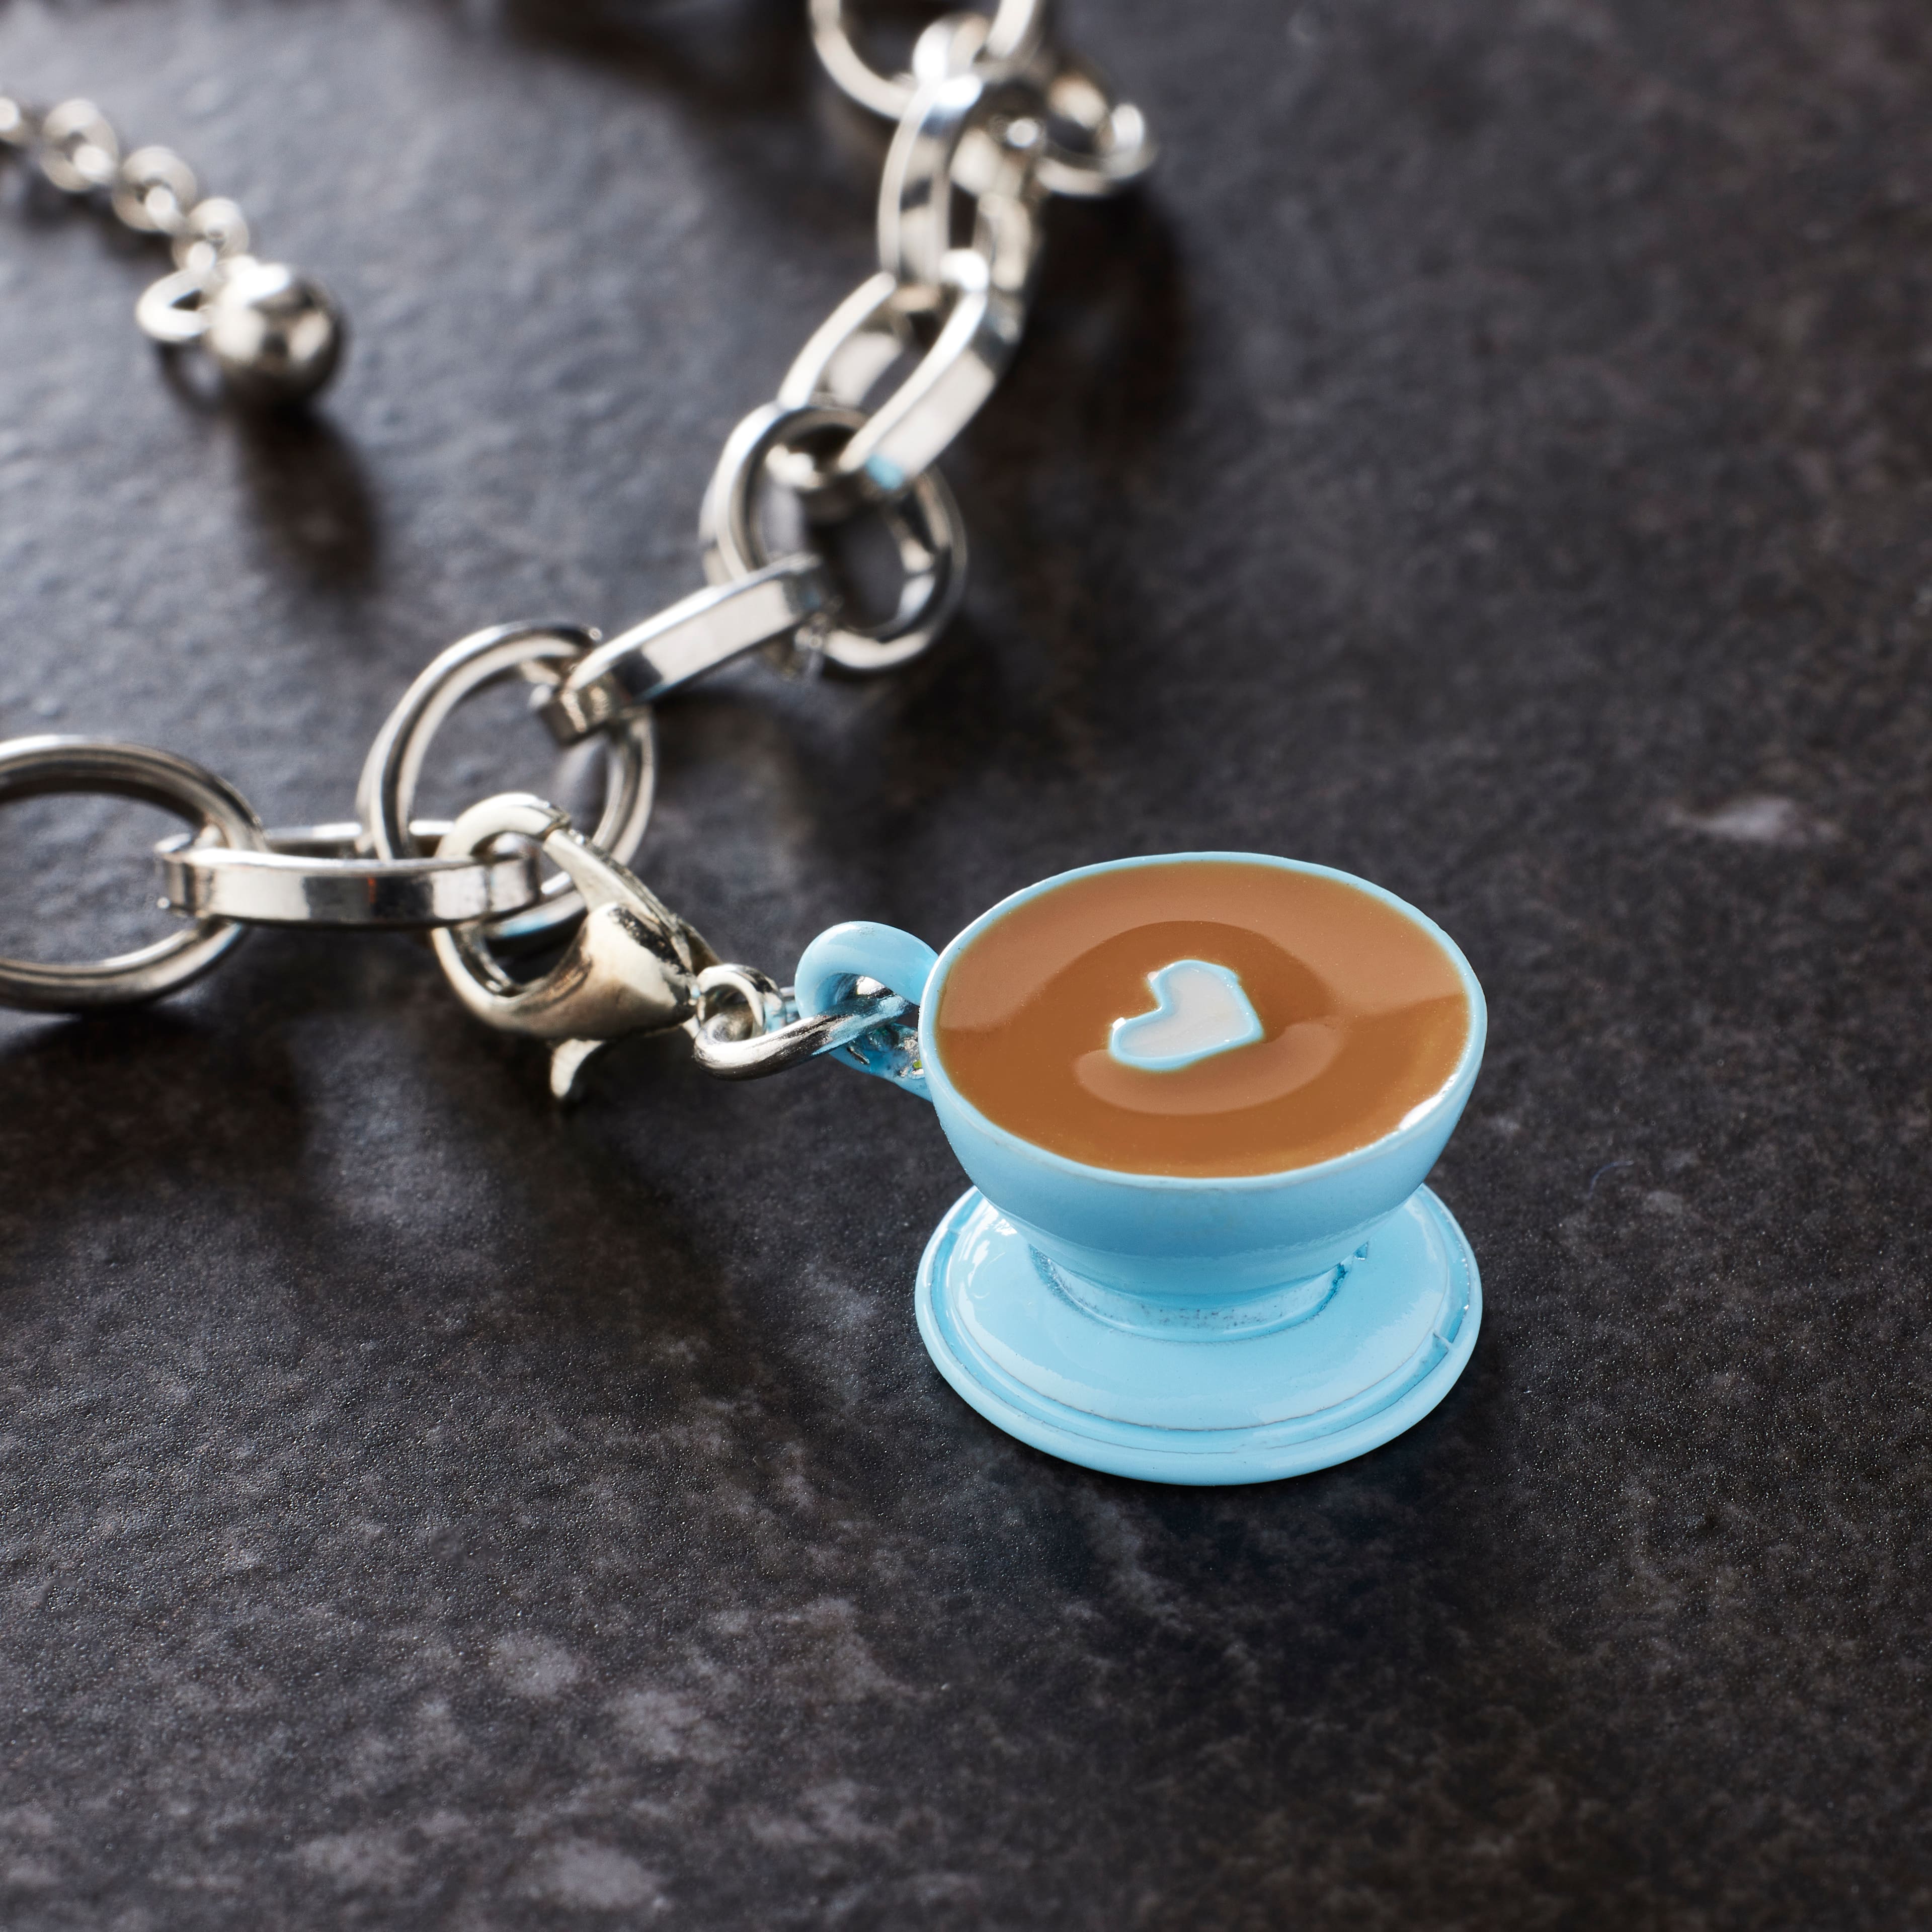 Coffee Cup Charm by Bead Landing&#x2122;